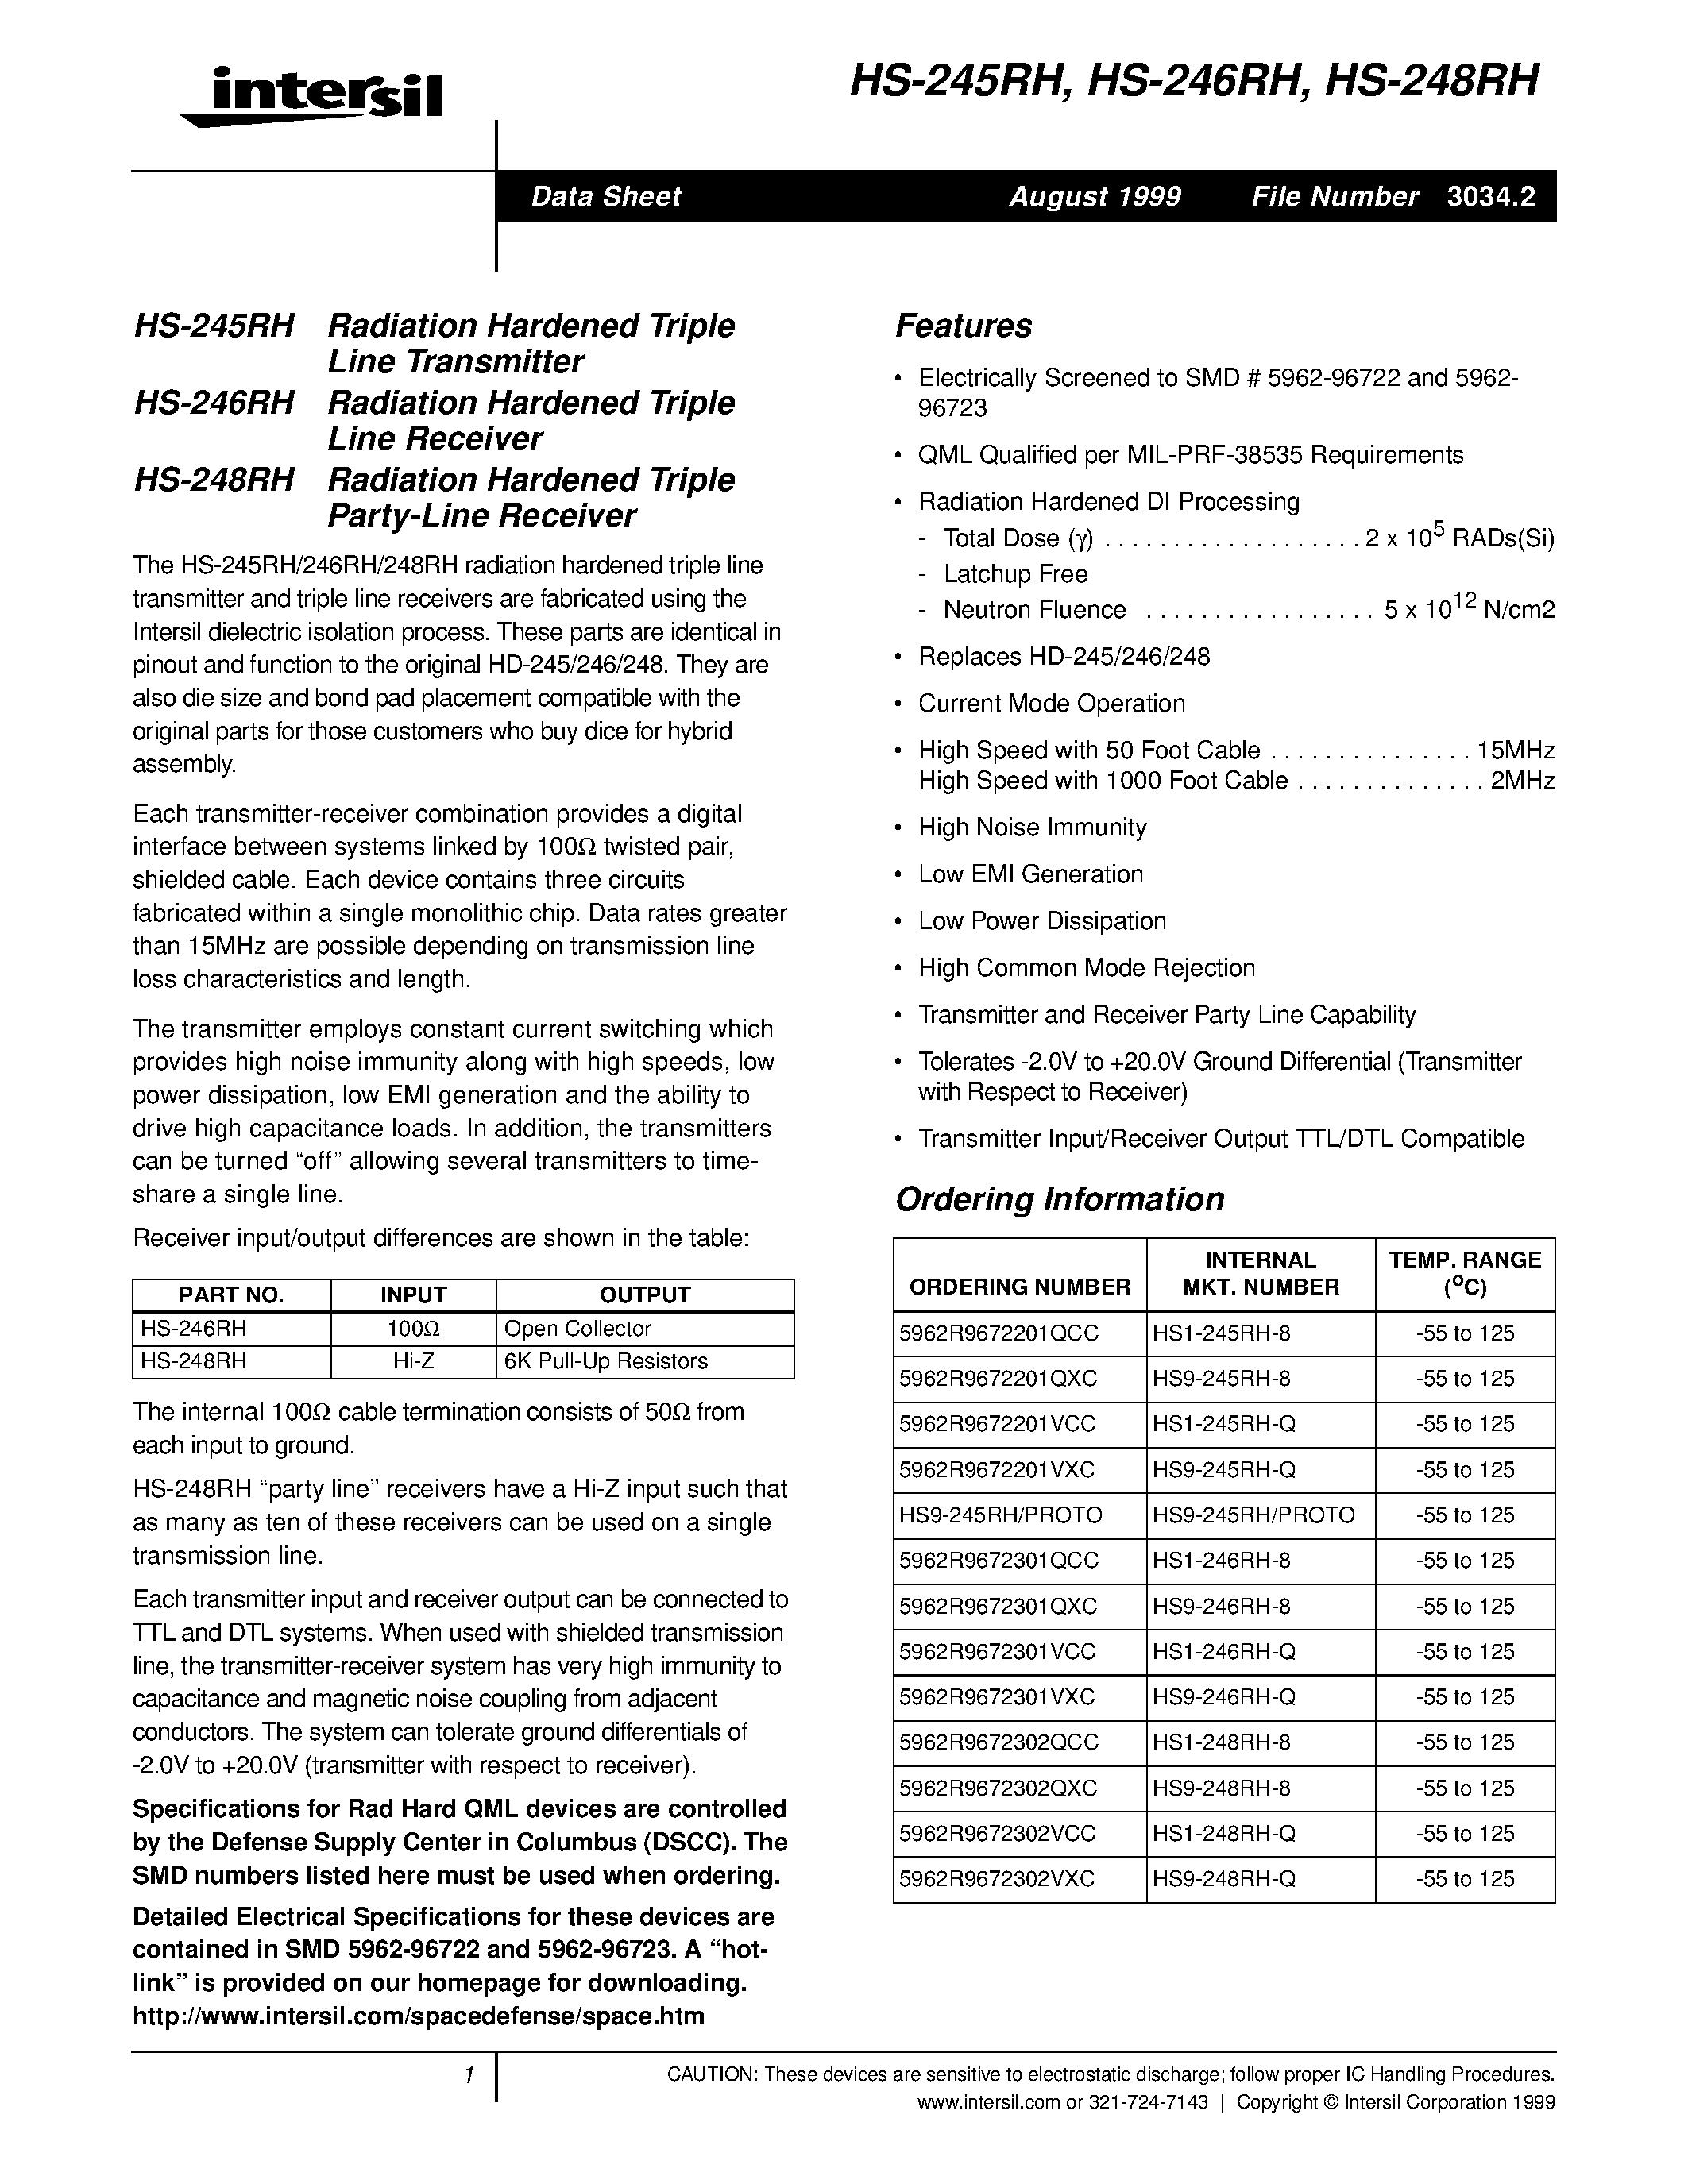 Даташит HS-245RH - Radiation Hardened Triple Line(party-Line) Transmitter страница 1